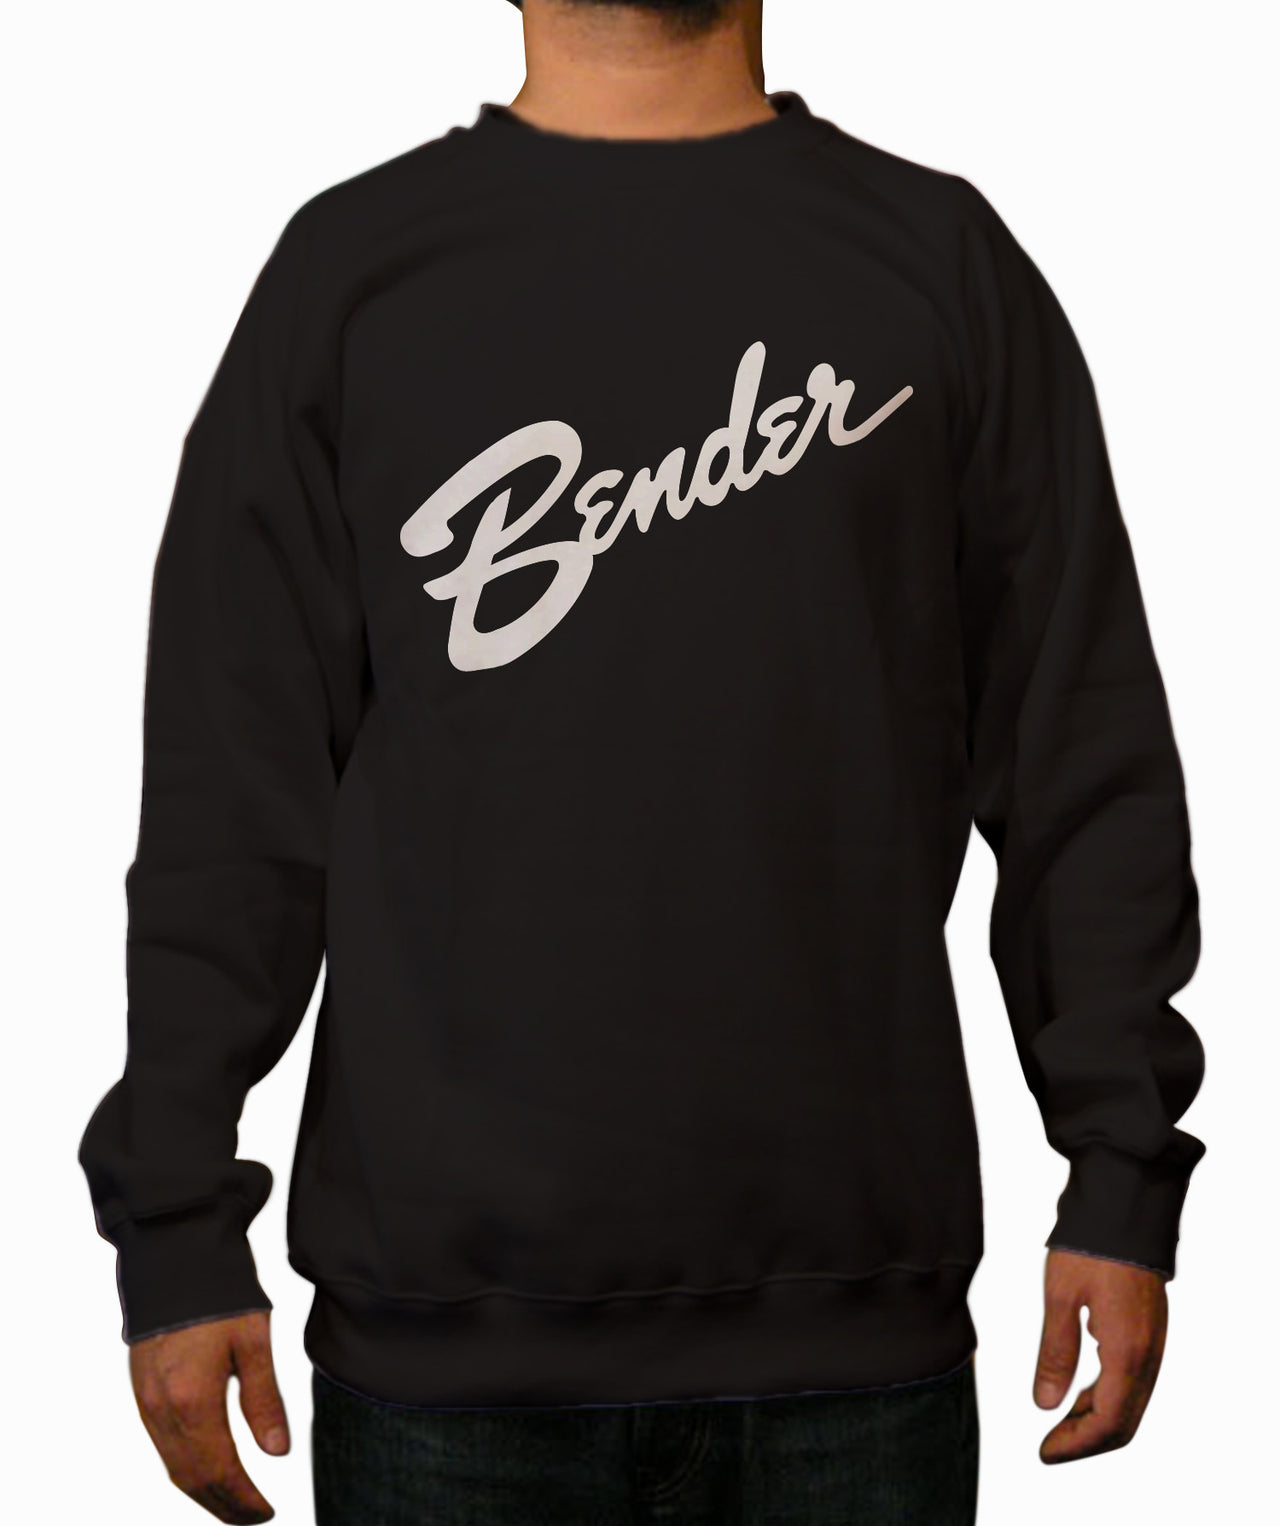 Bender Black Crewneck Sweatshirt - TshirtNow.net - 1